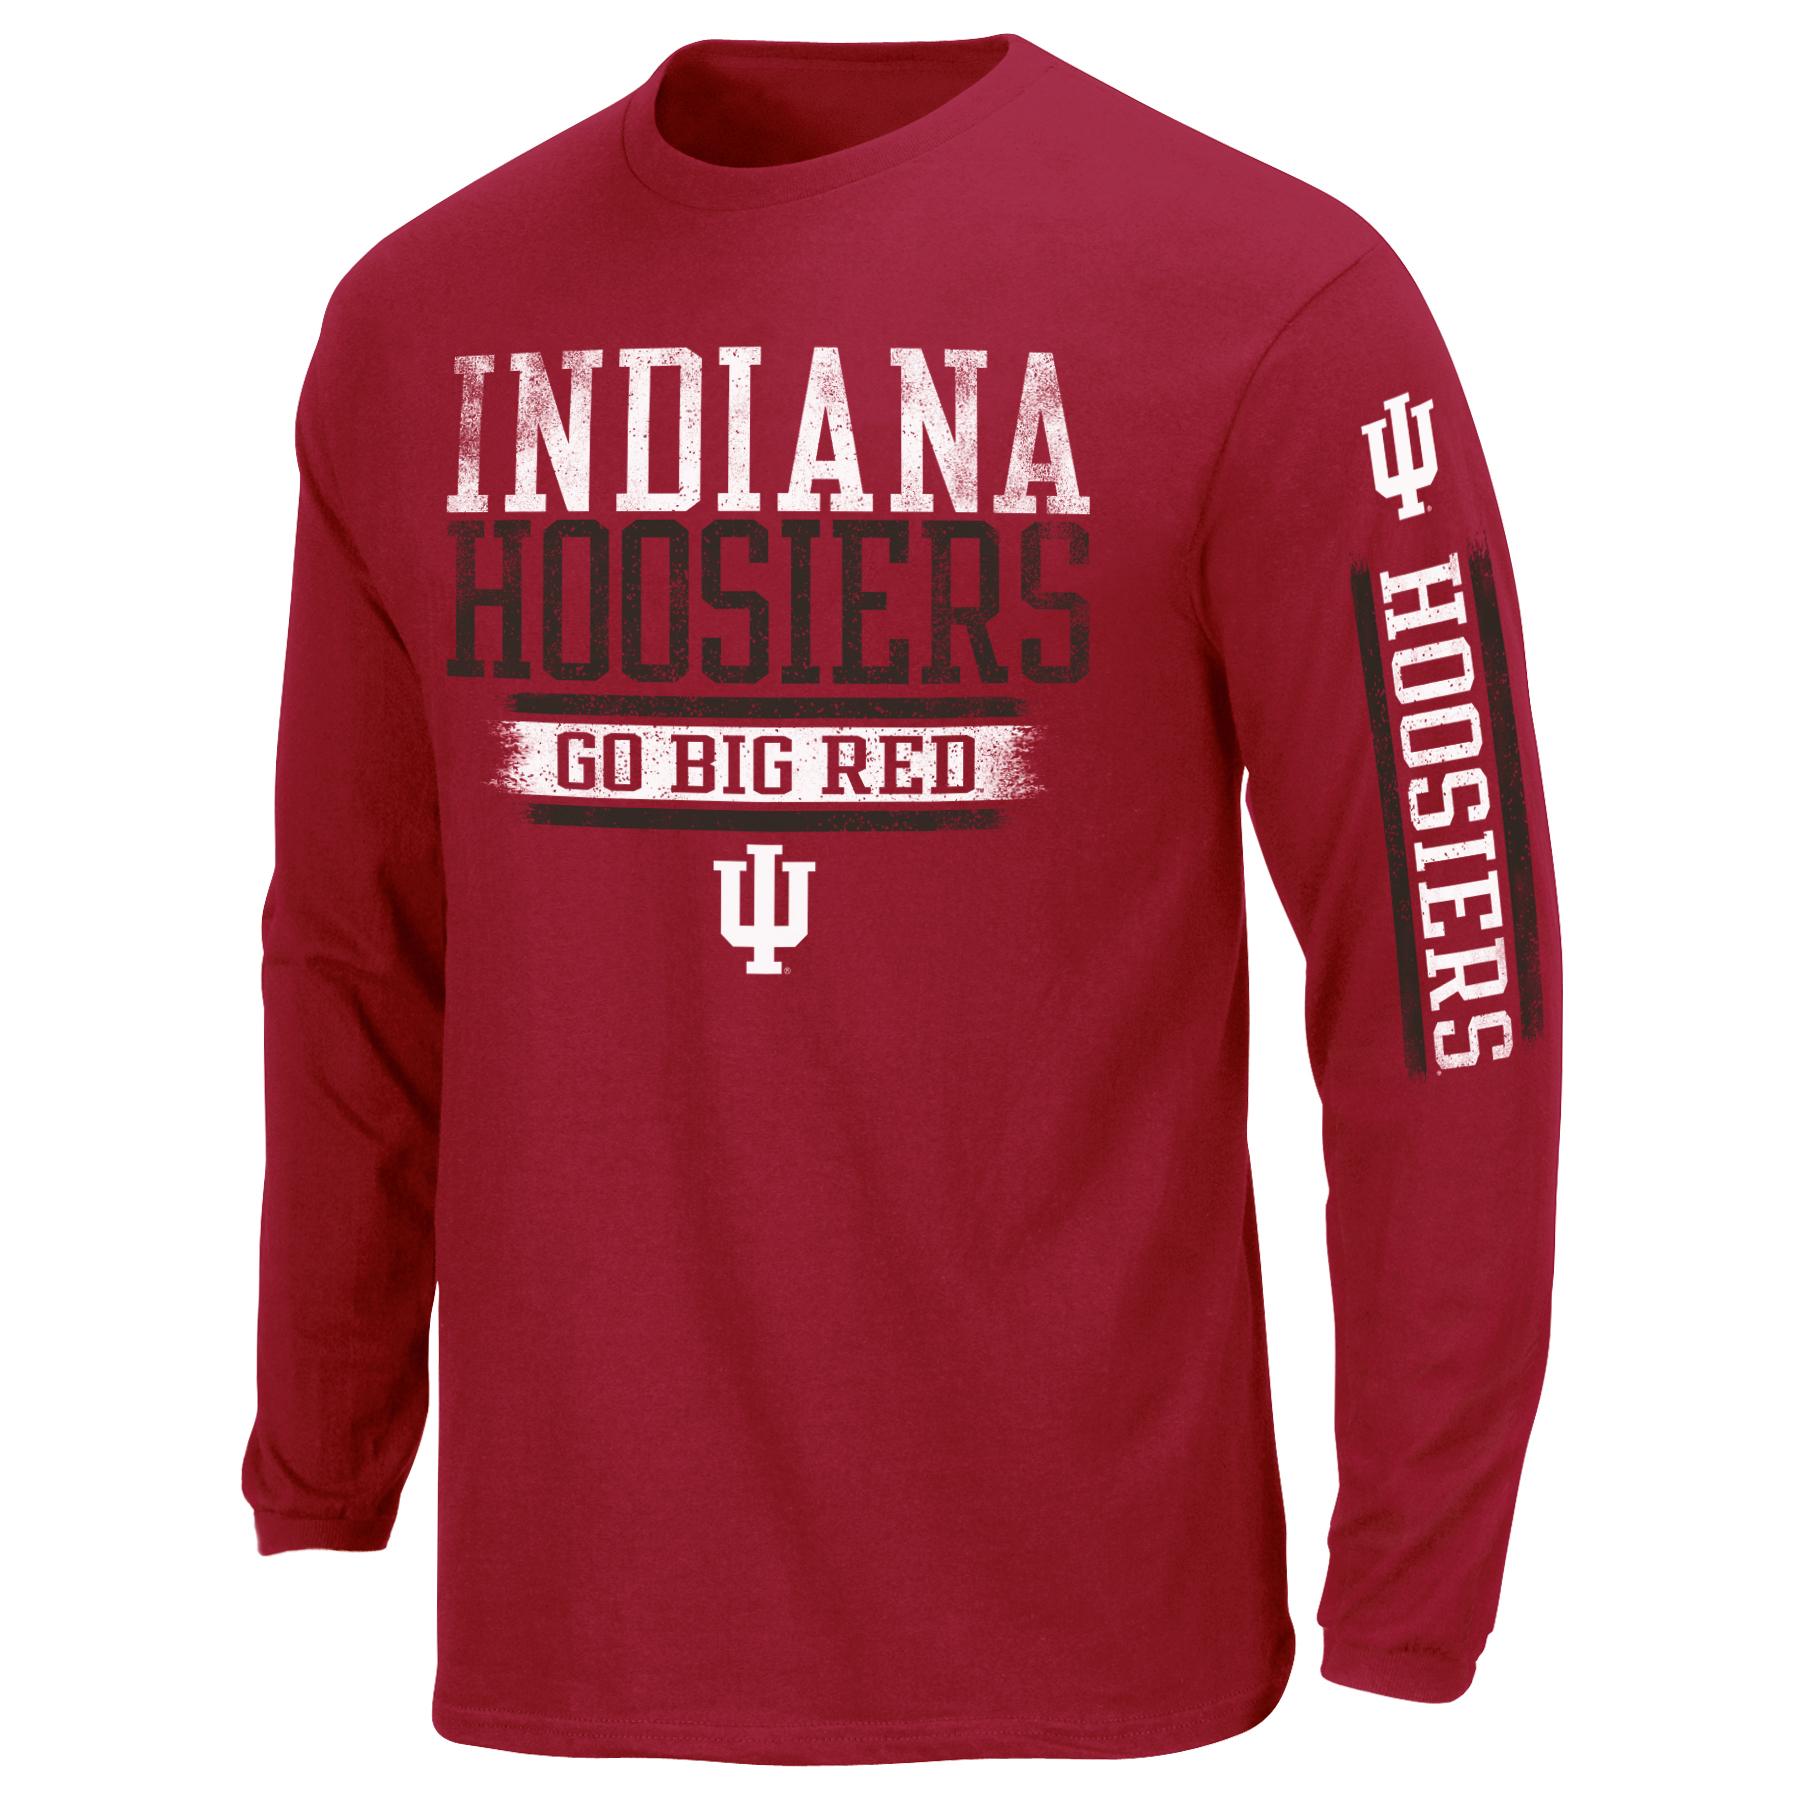 NCAA Men's Long-Sleeve T-Shirt - Indiana Hoosiers